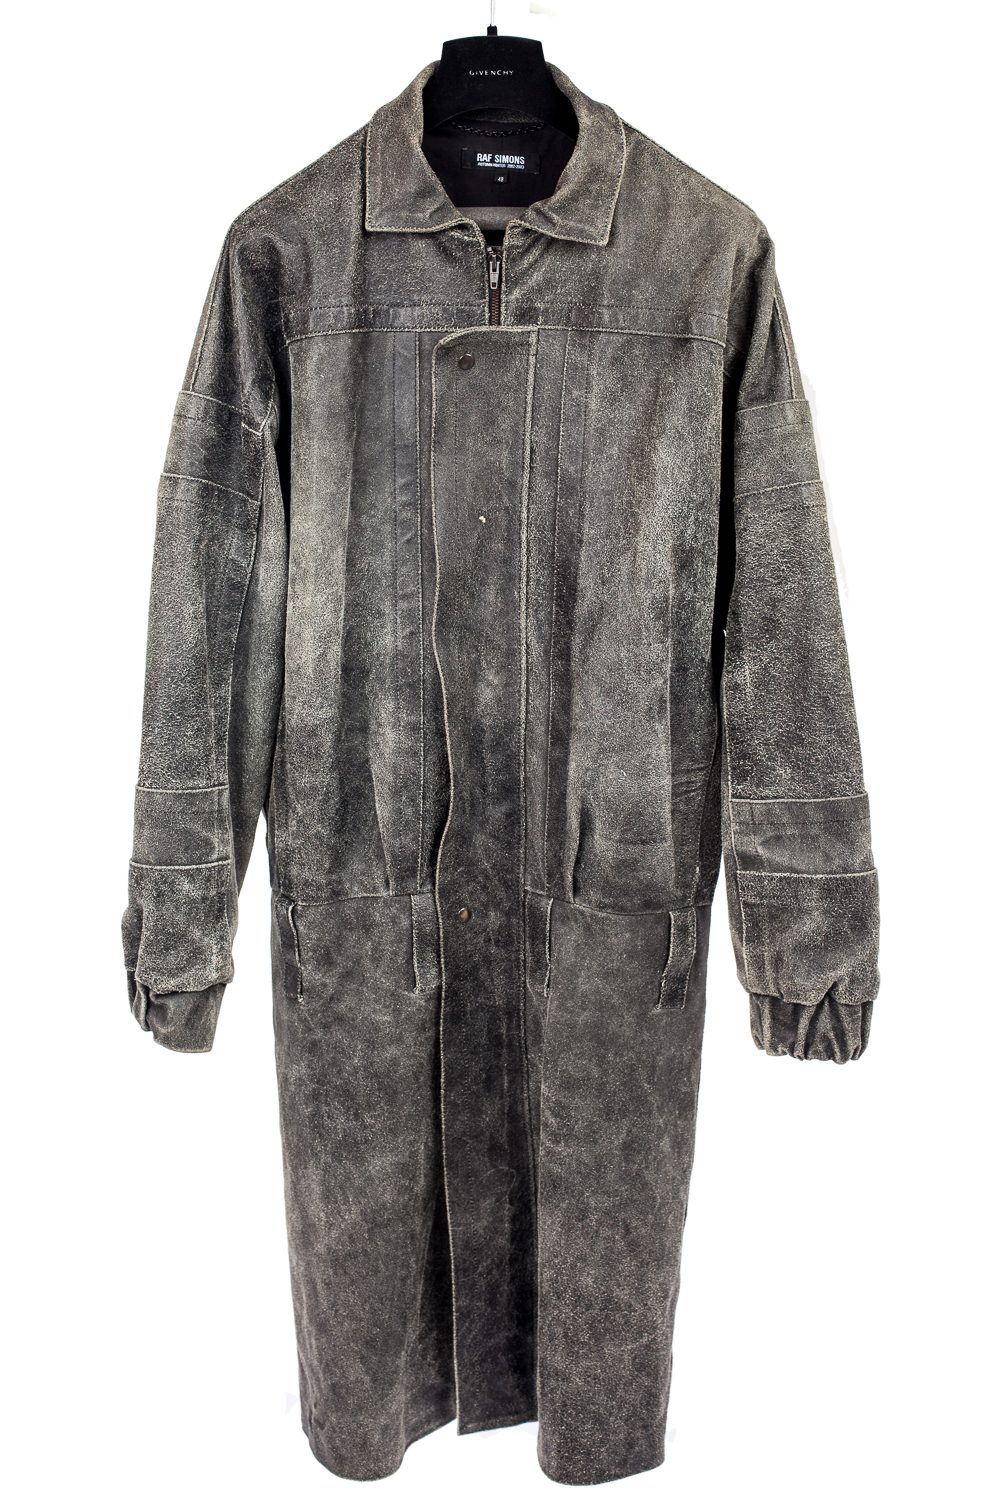 AW02 “Virginia Creeper” Distressed Leather Coat